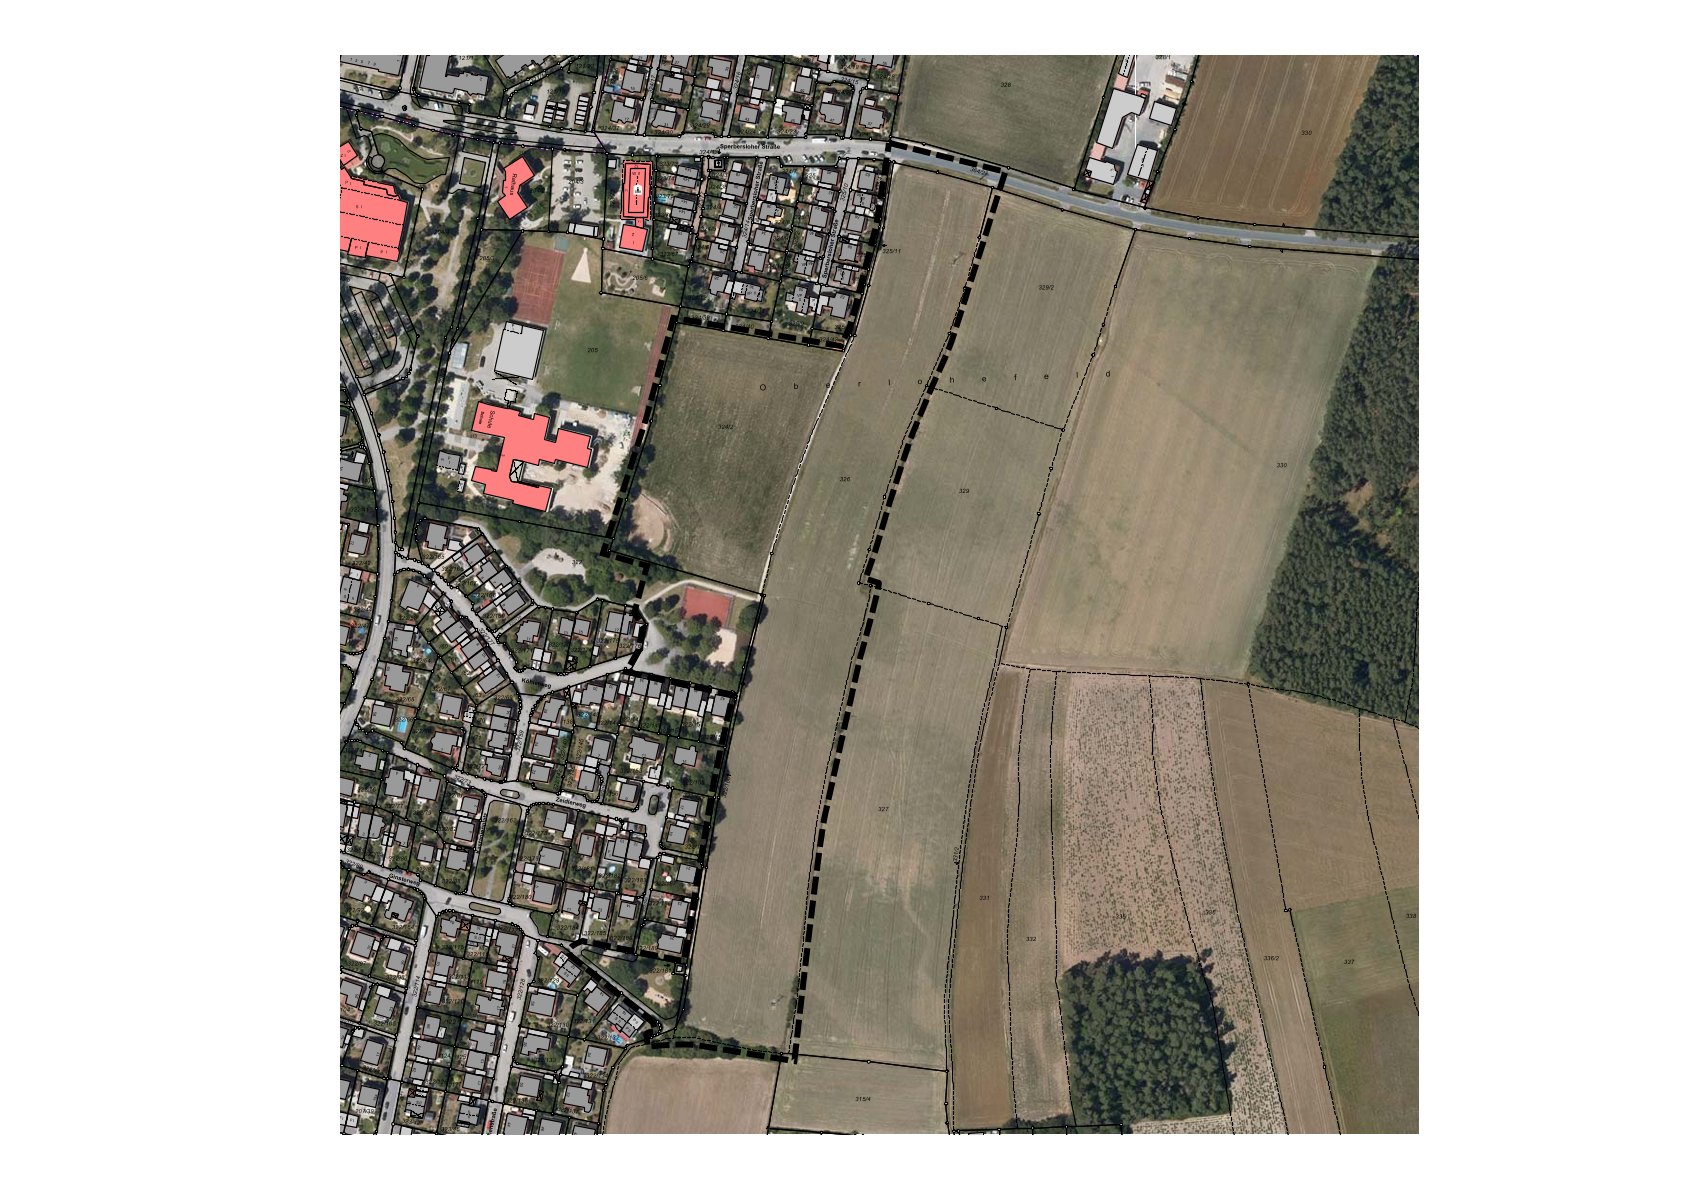  Luftbild vom Baugebiet Oberlohe. 